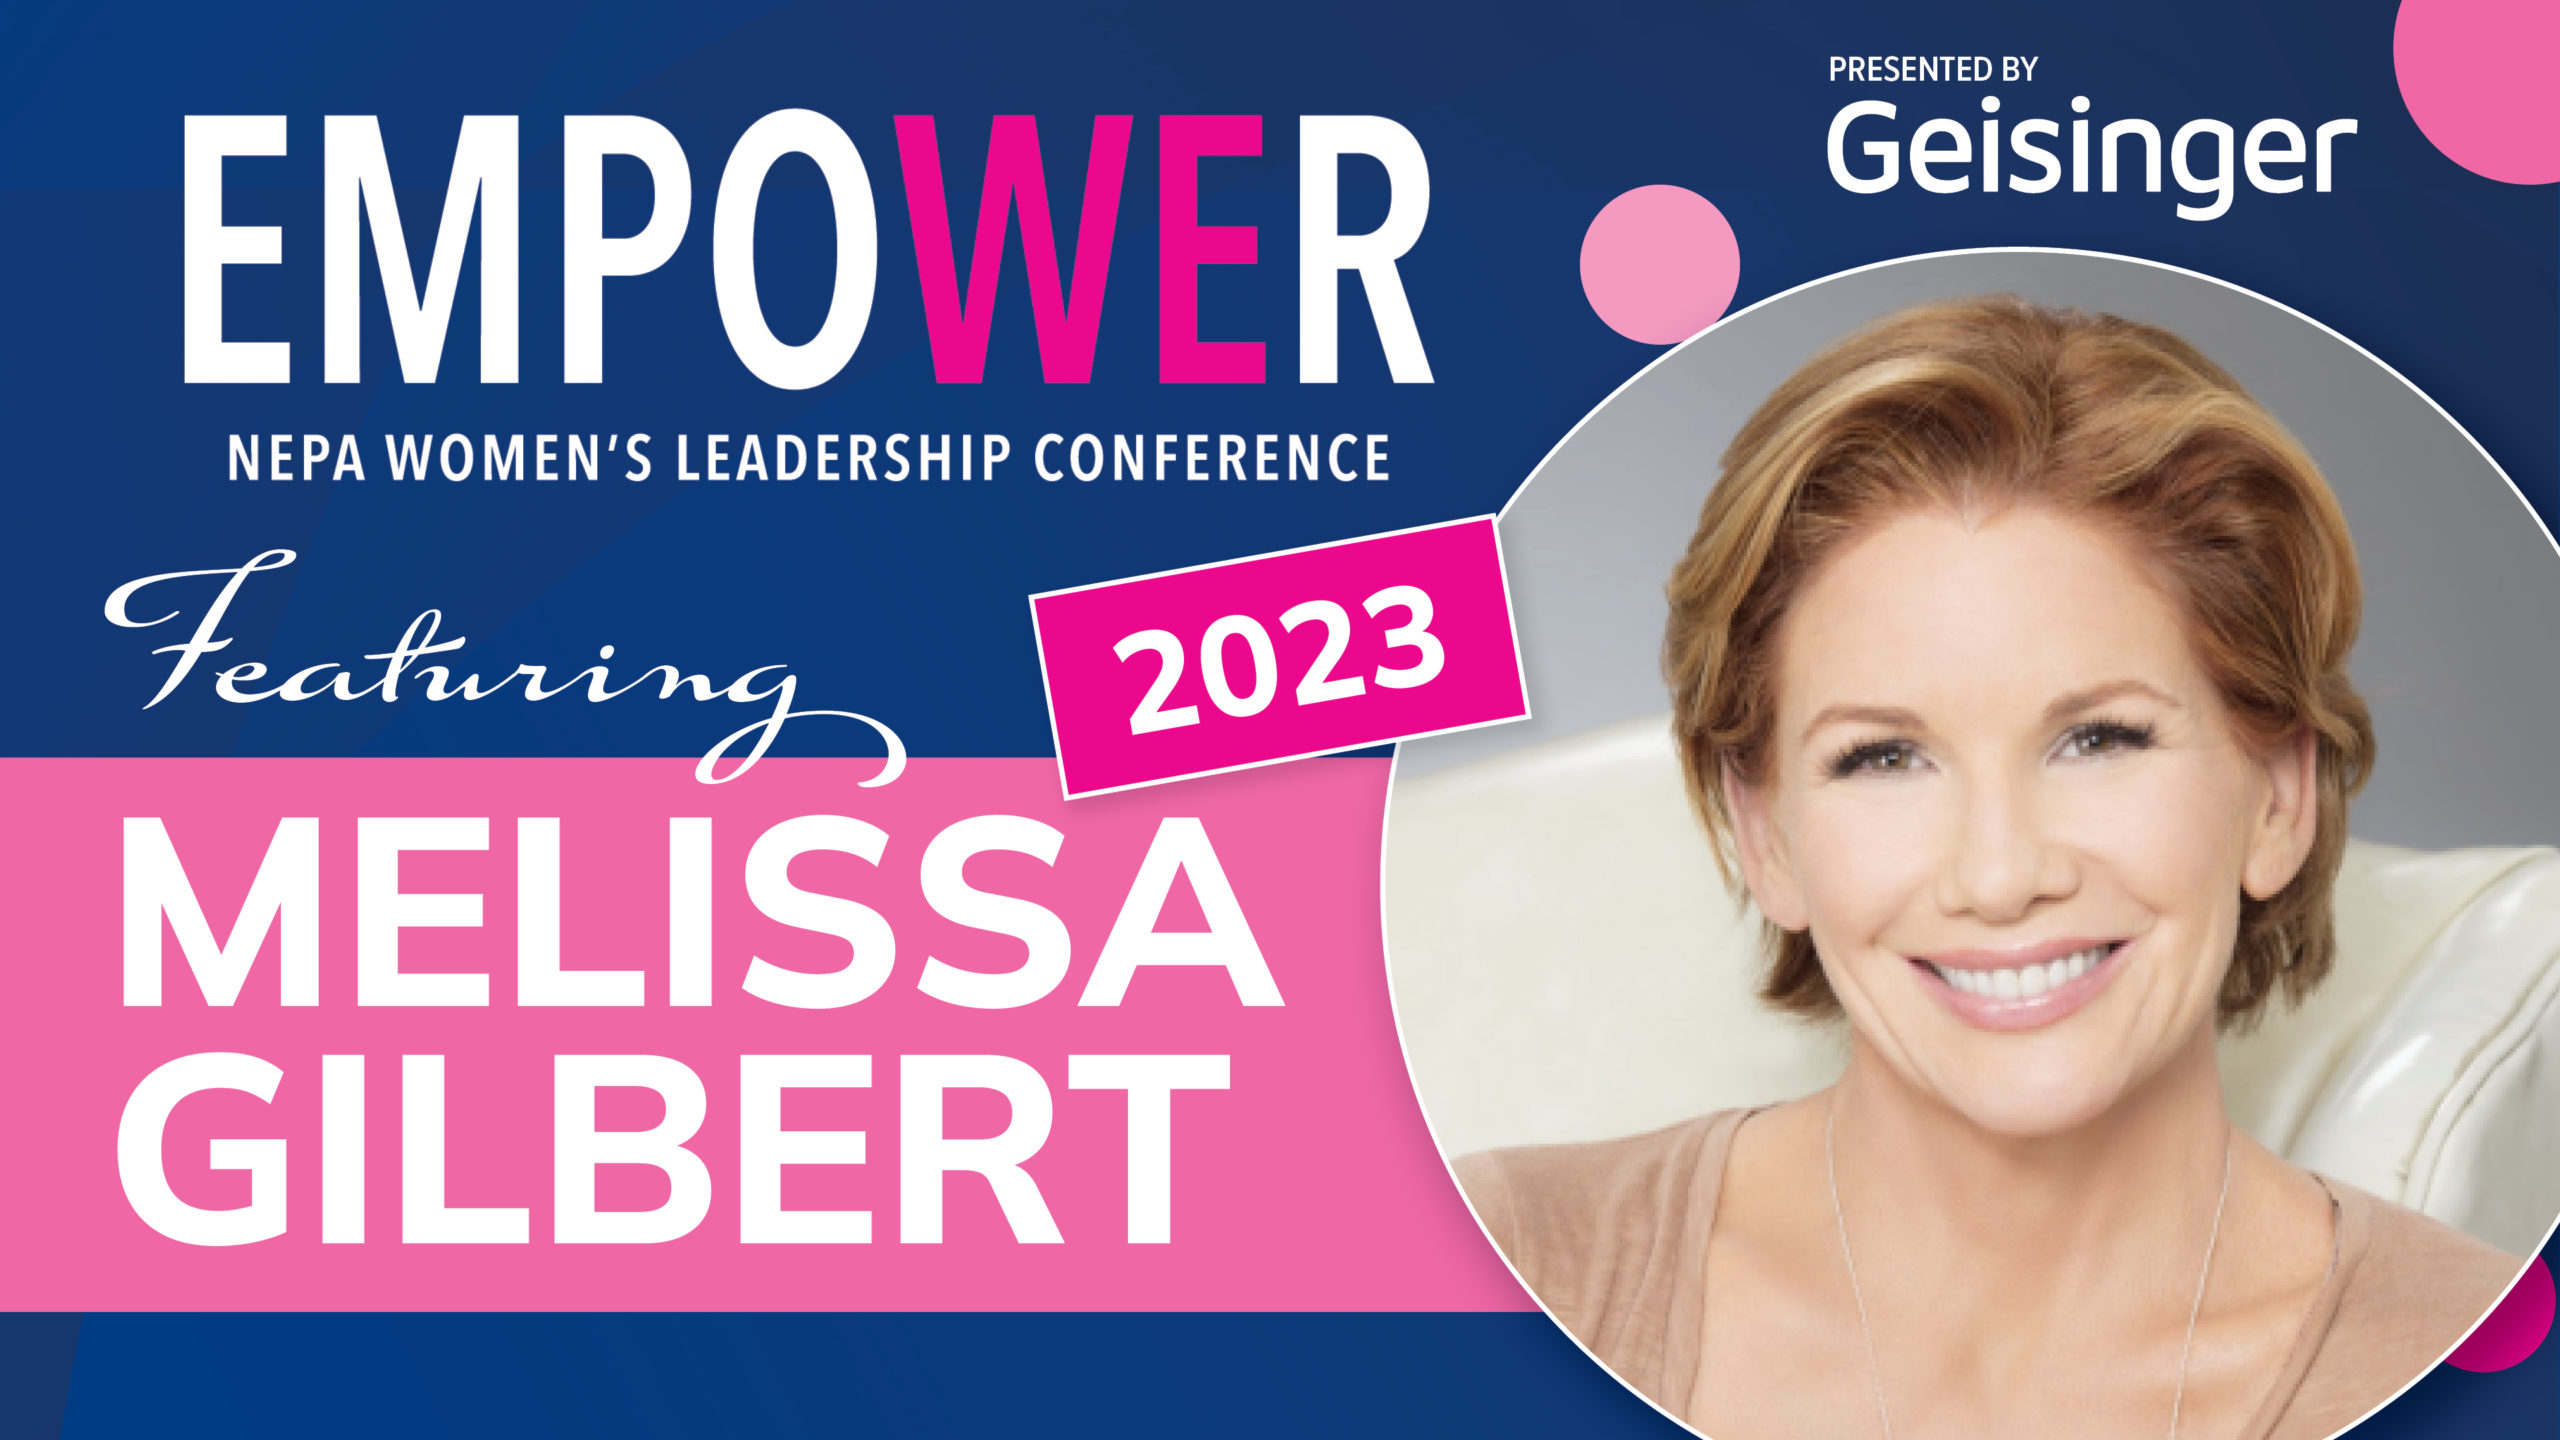 Melissa Gilbert – EMPOWER Conference Keynote Speaker